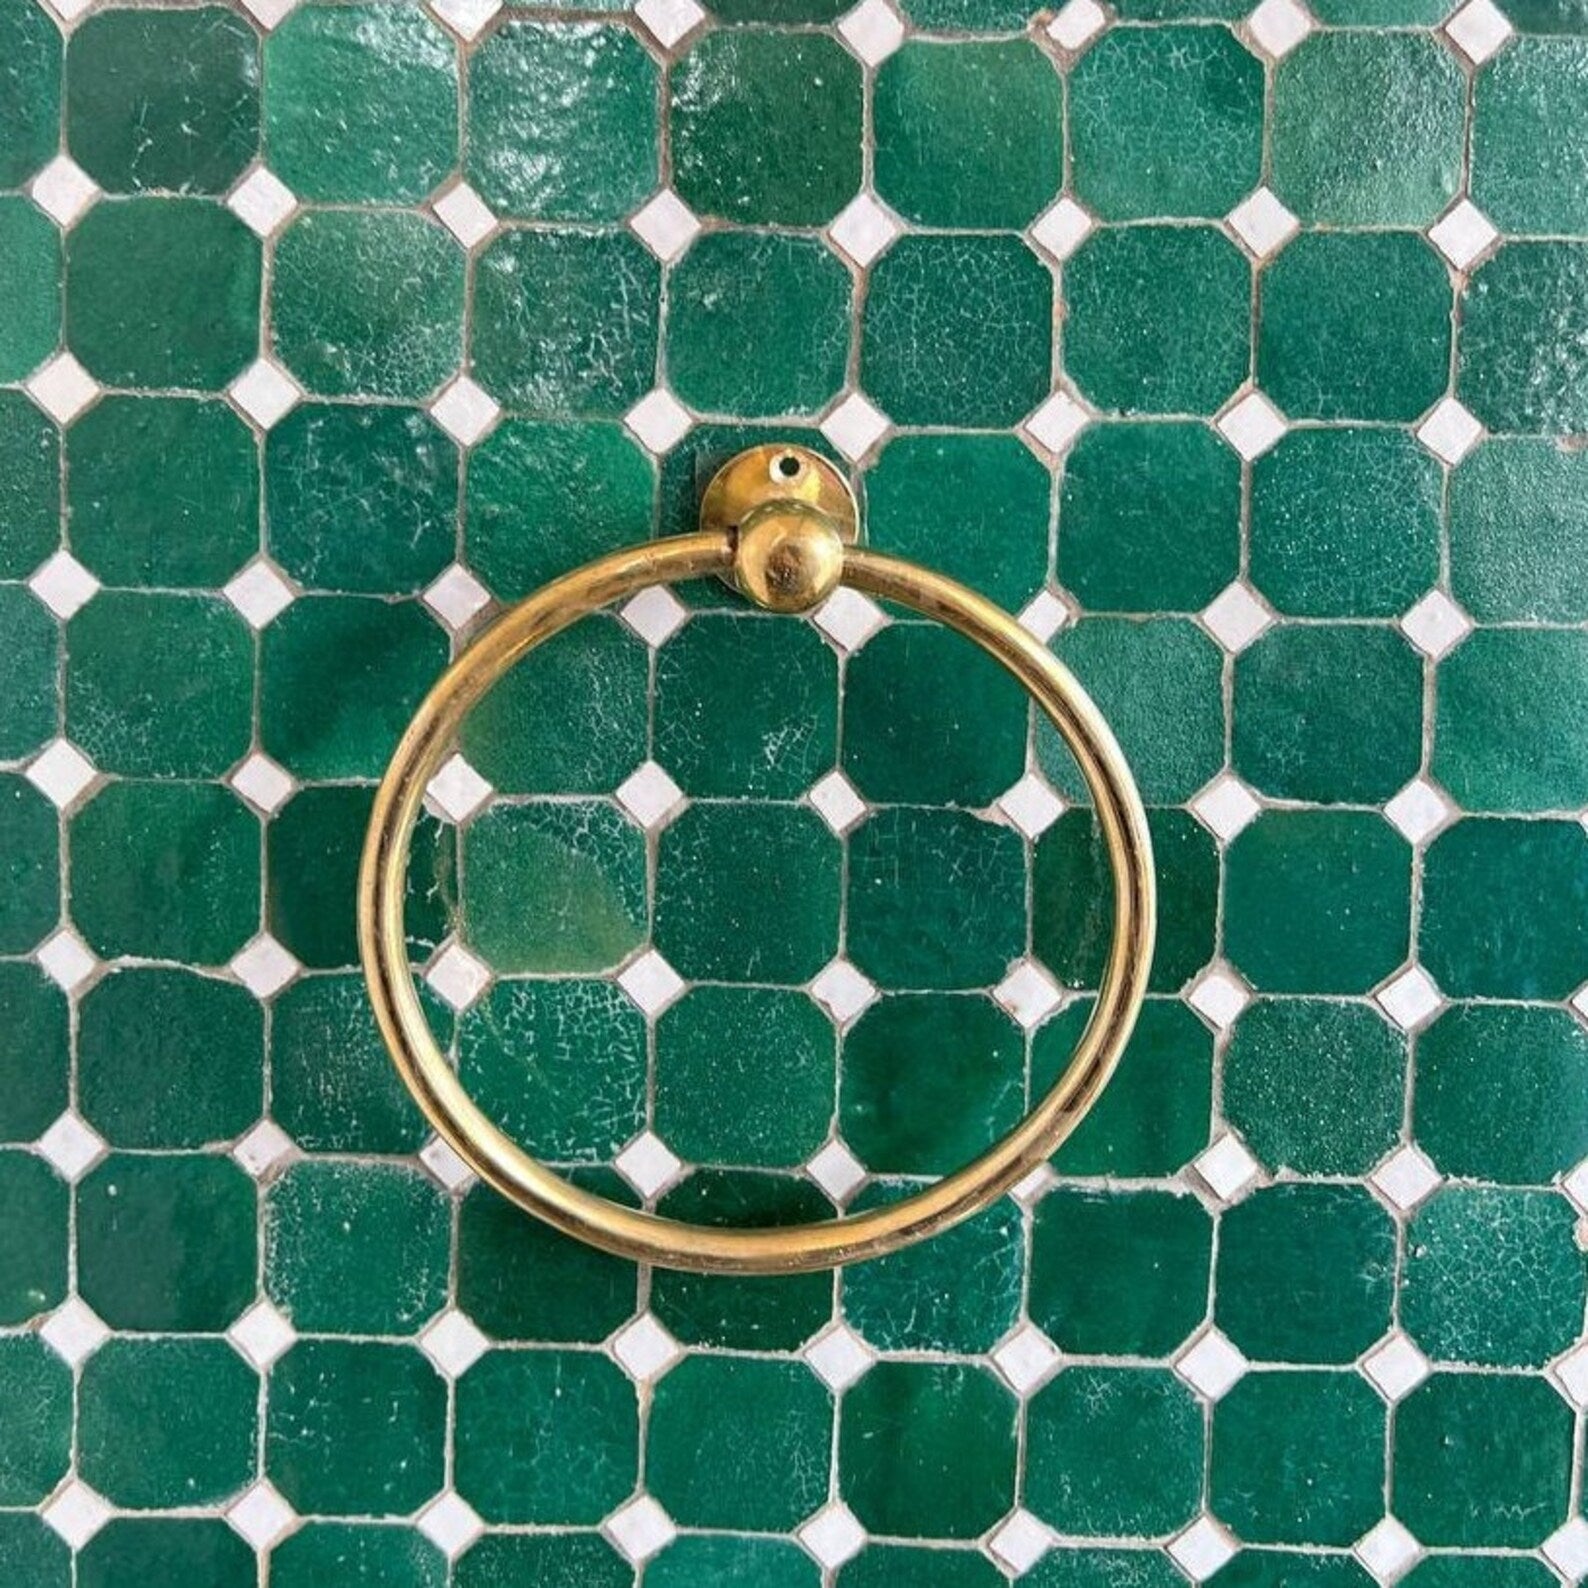 Circle Unlacquered Brass Towel Rack Holder - Solid Brass Towel Rail